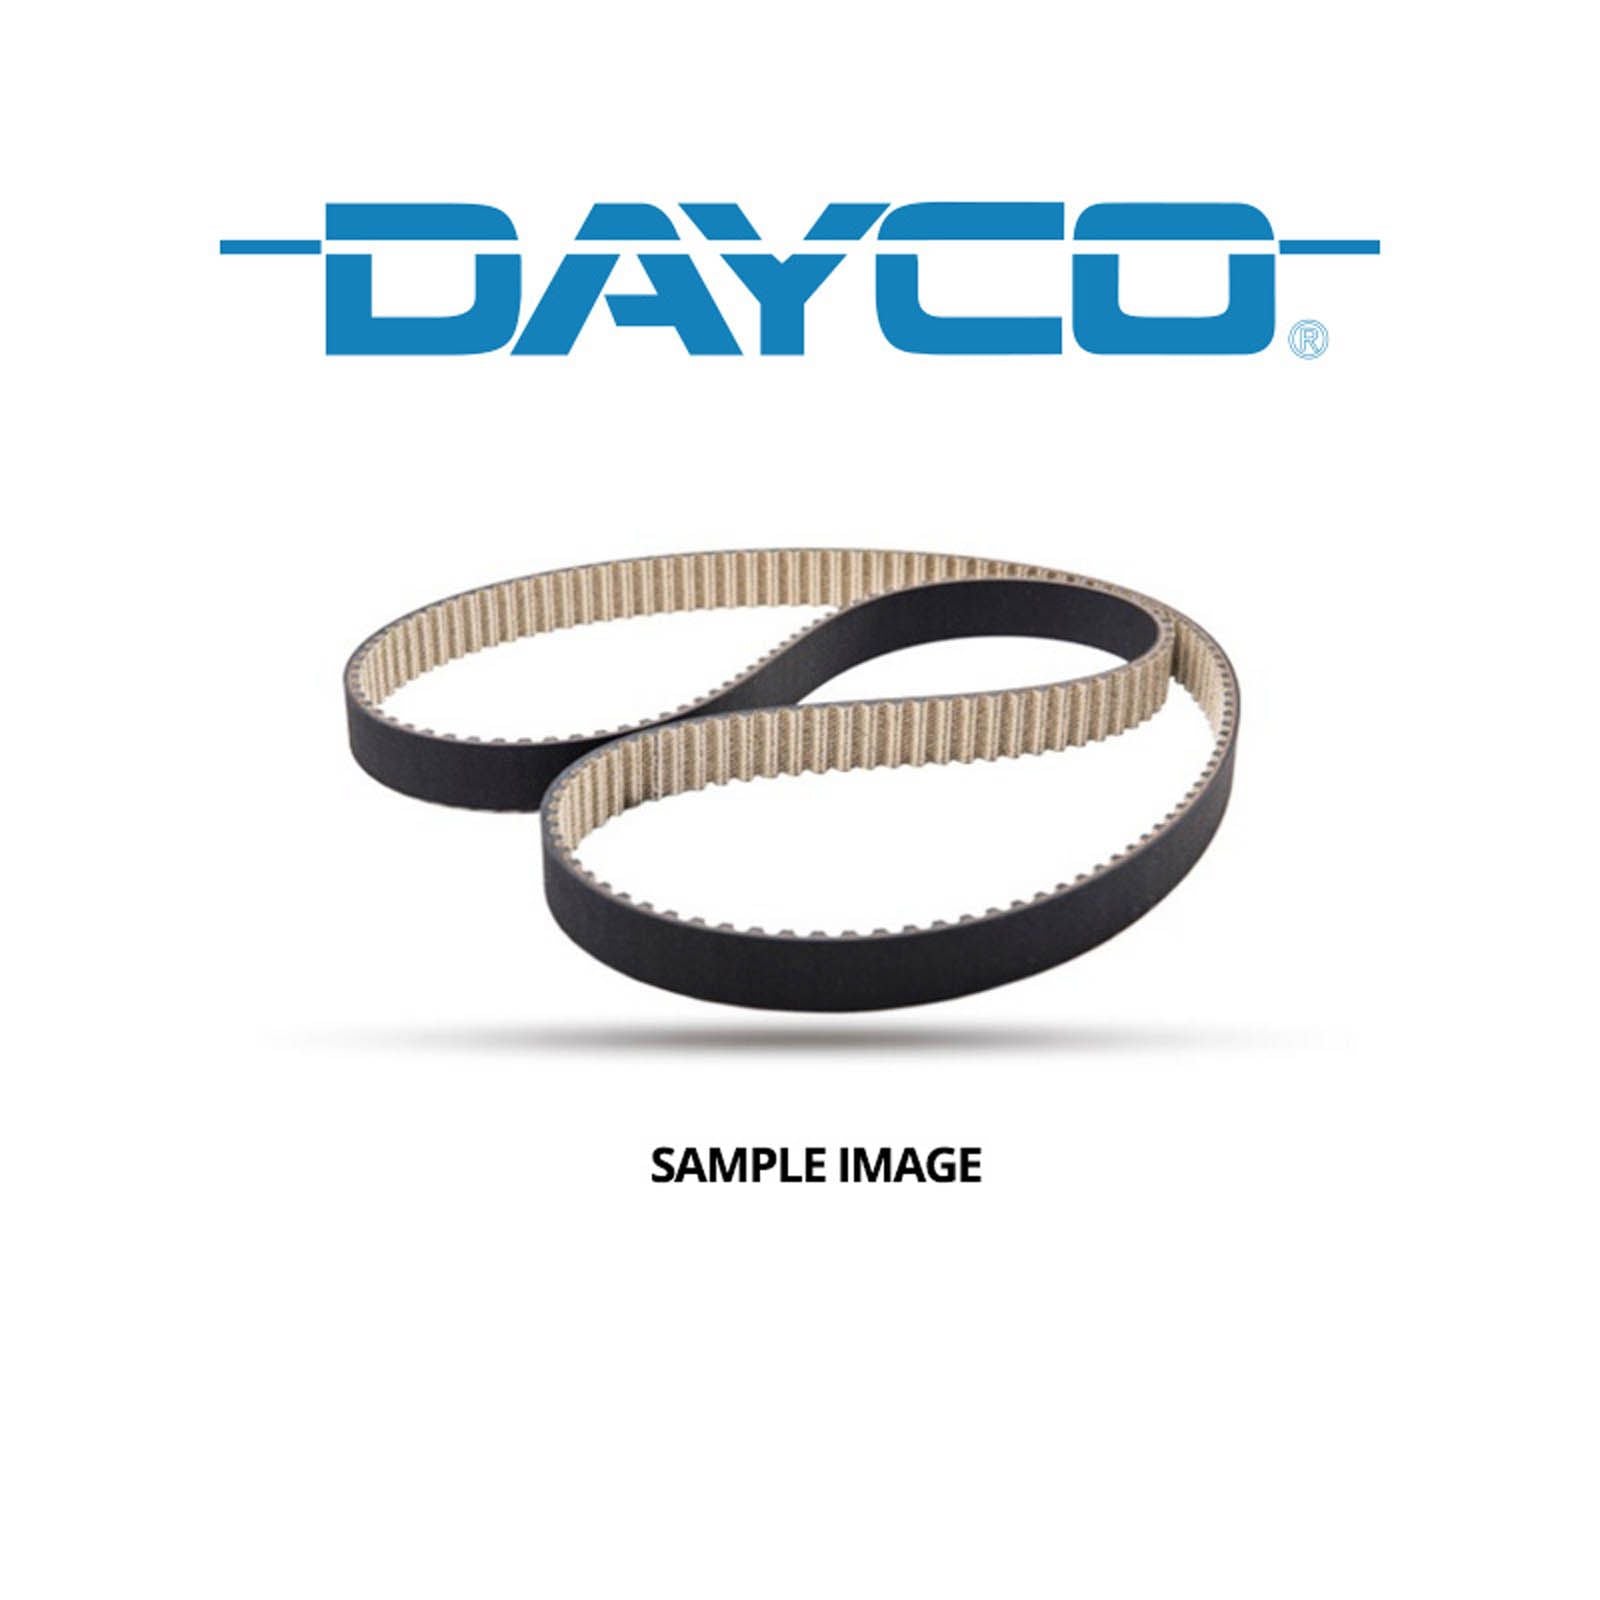 New DAYCO ATV Drive Belt HP 23.0 X 928 HP2023 #ATVDBHP2023